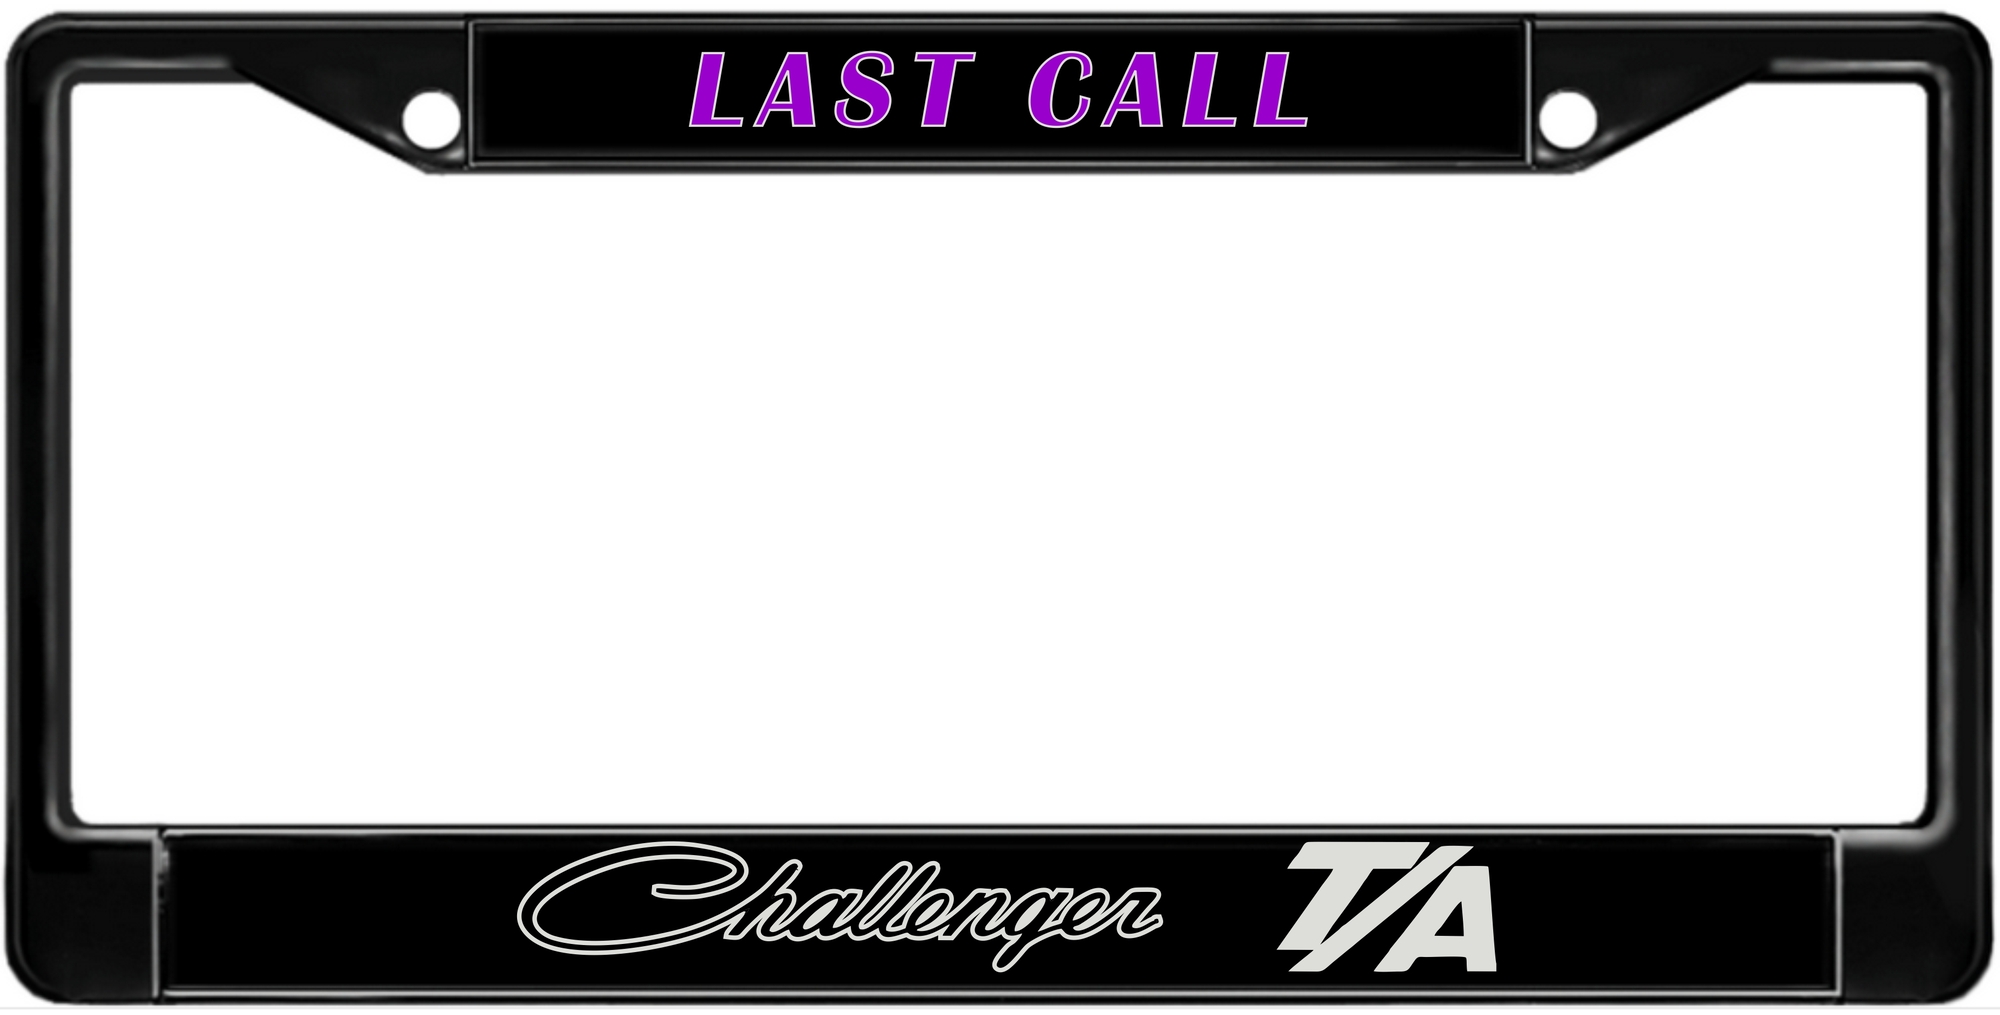 Last Call - Car Metal License Plate Frame